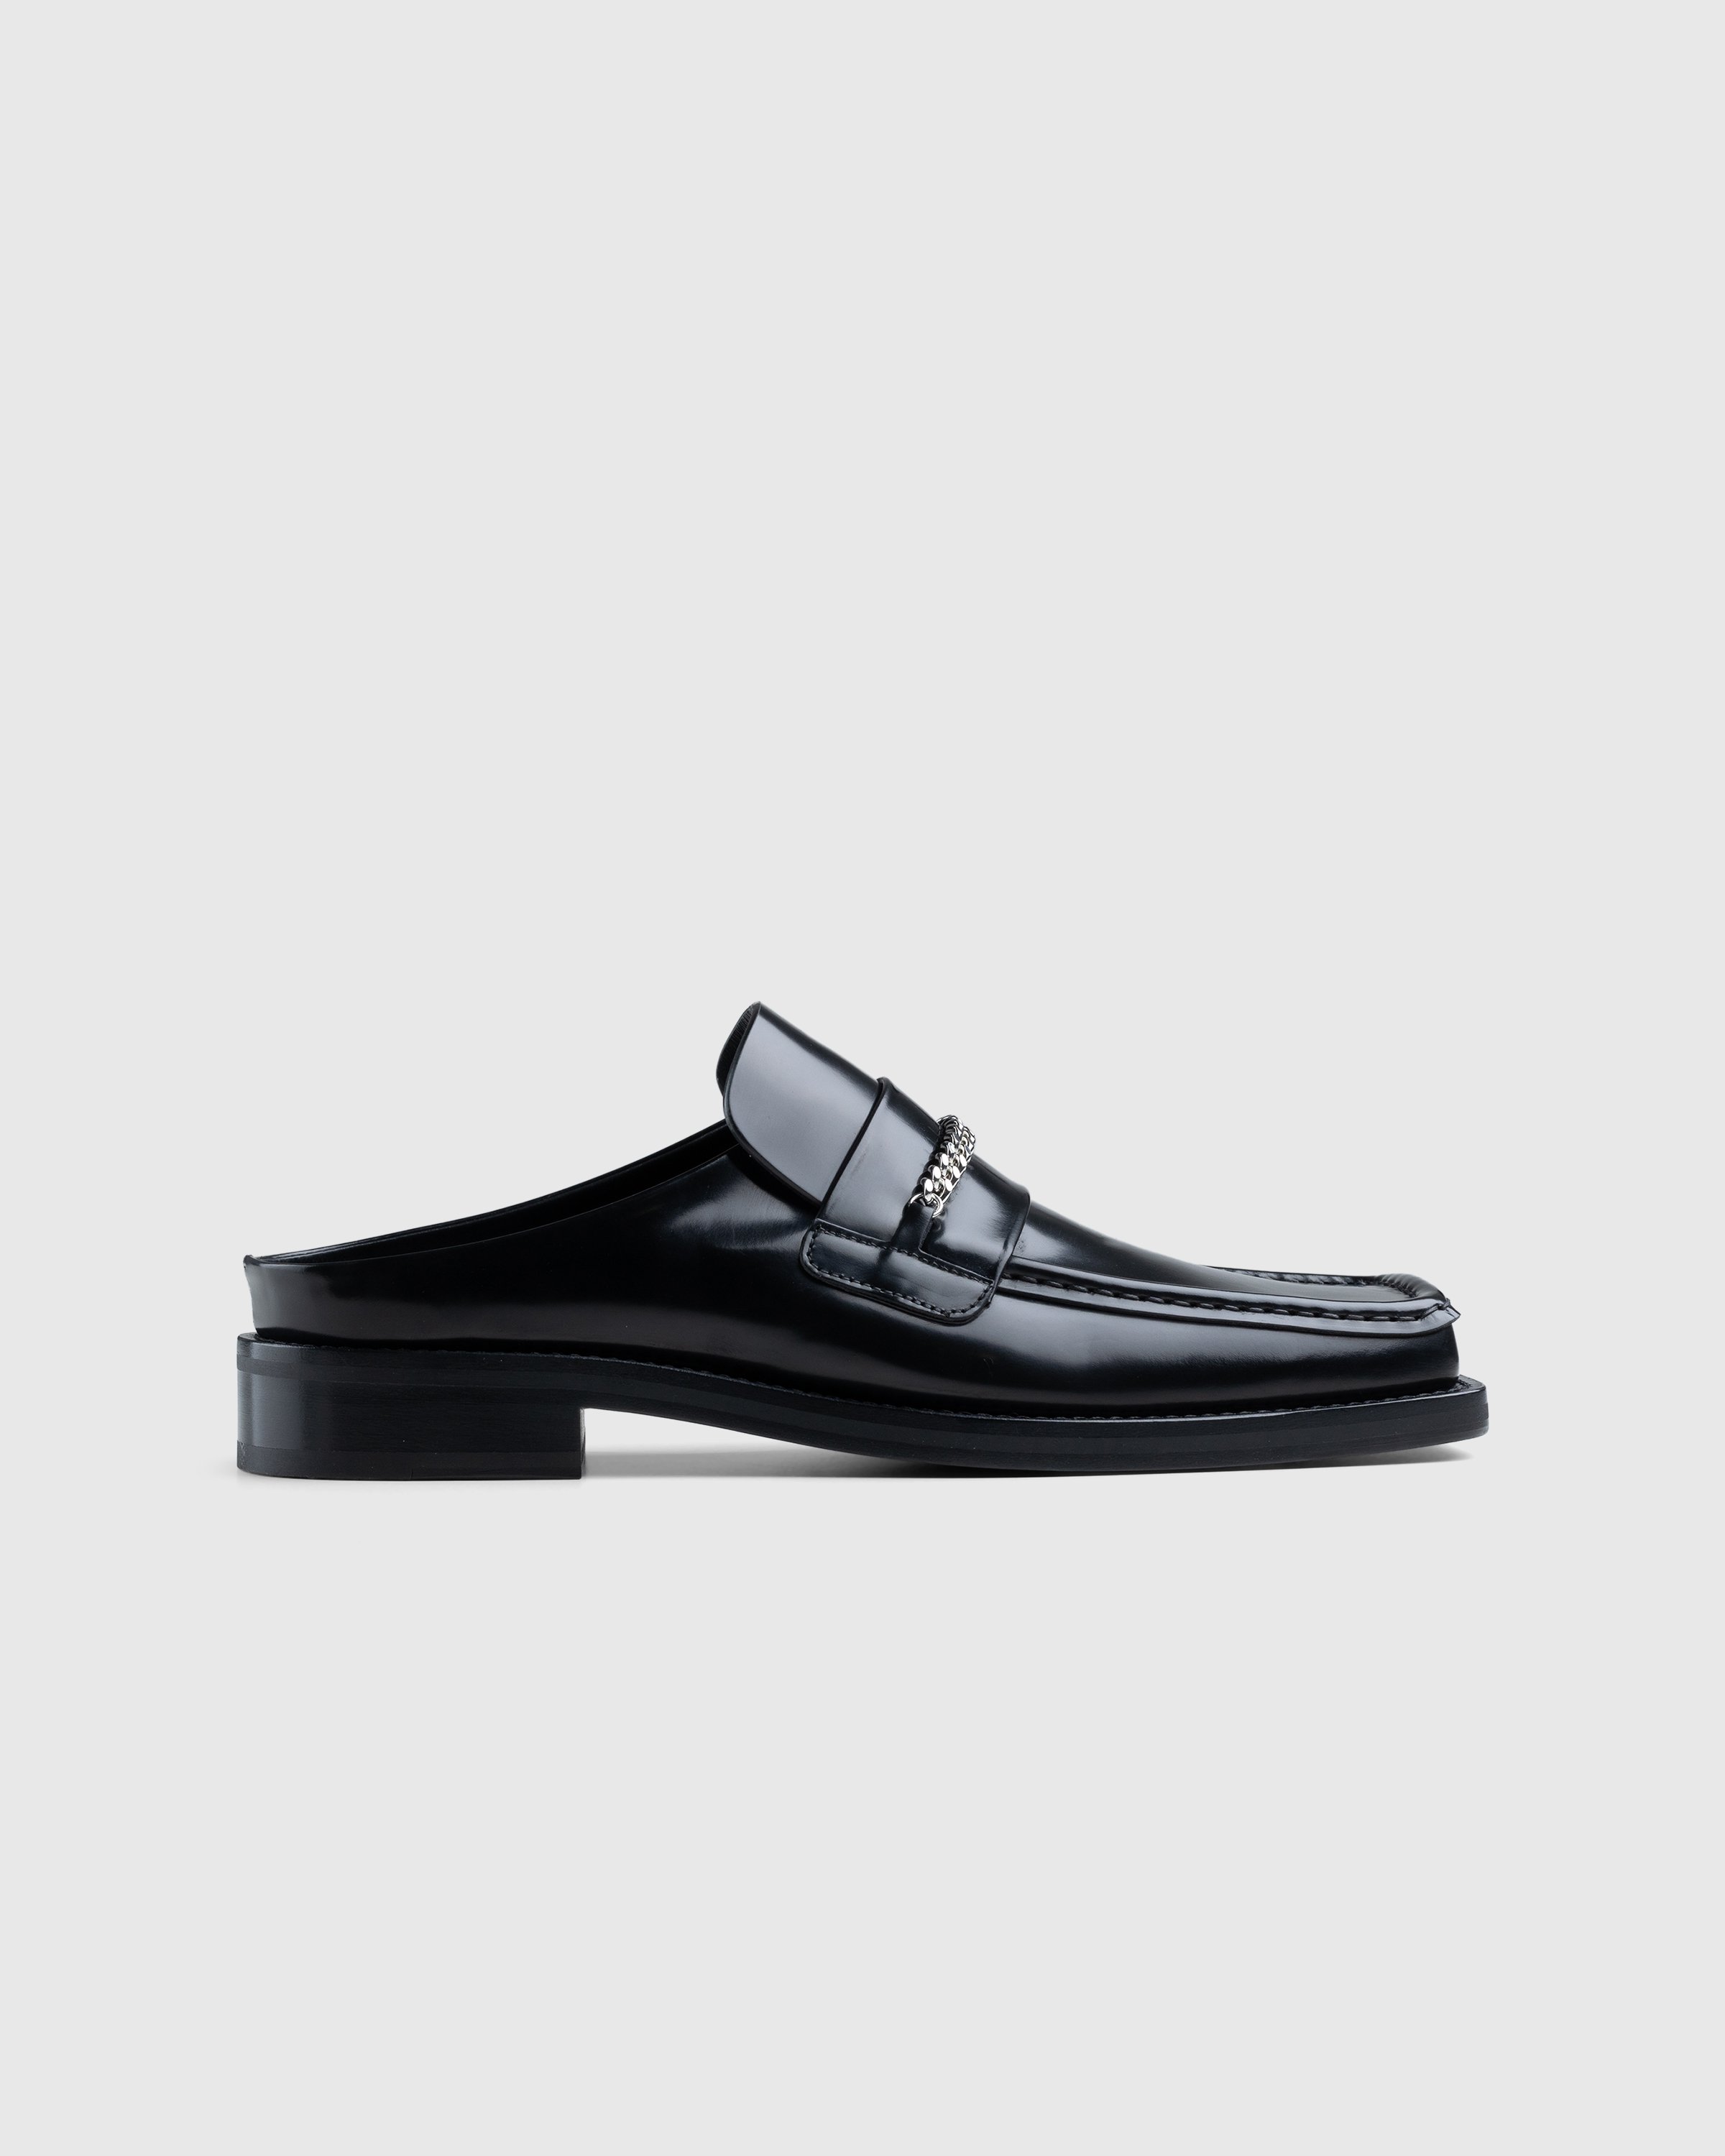 Martine Rose - Square Toe Mule High Shine Black - Footwear - Black - Image 1